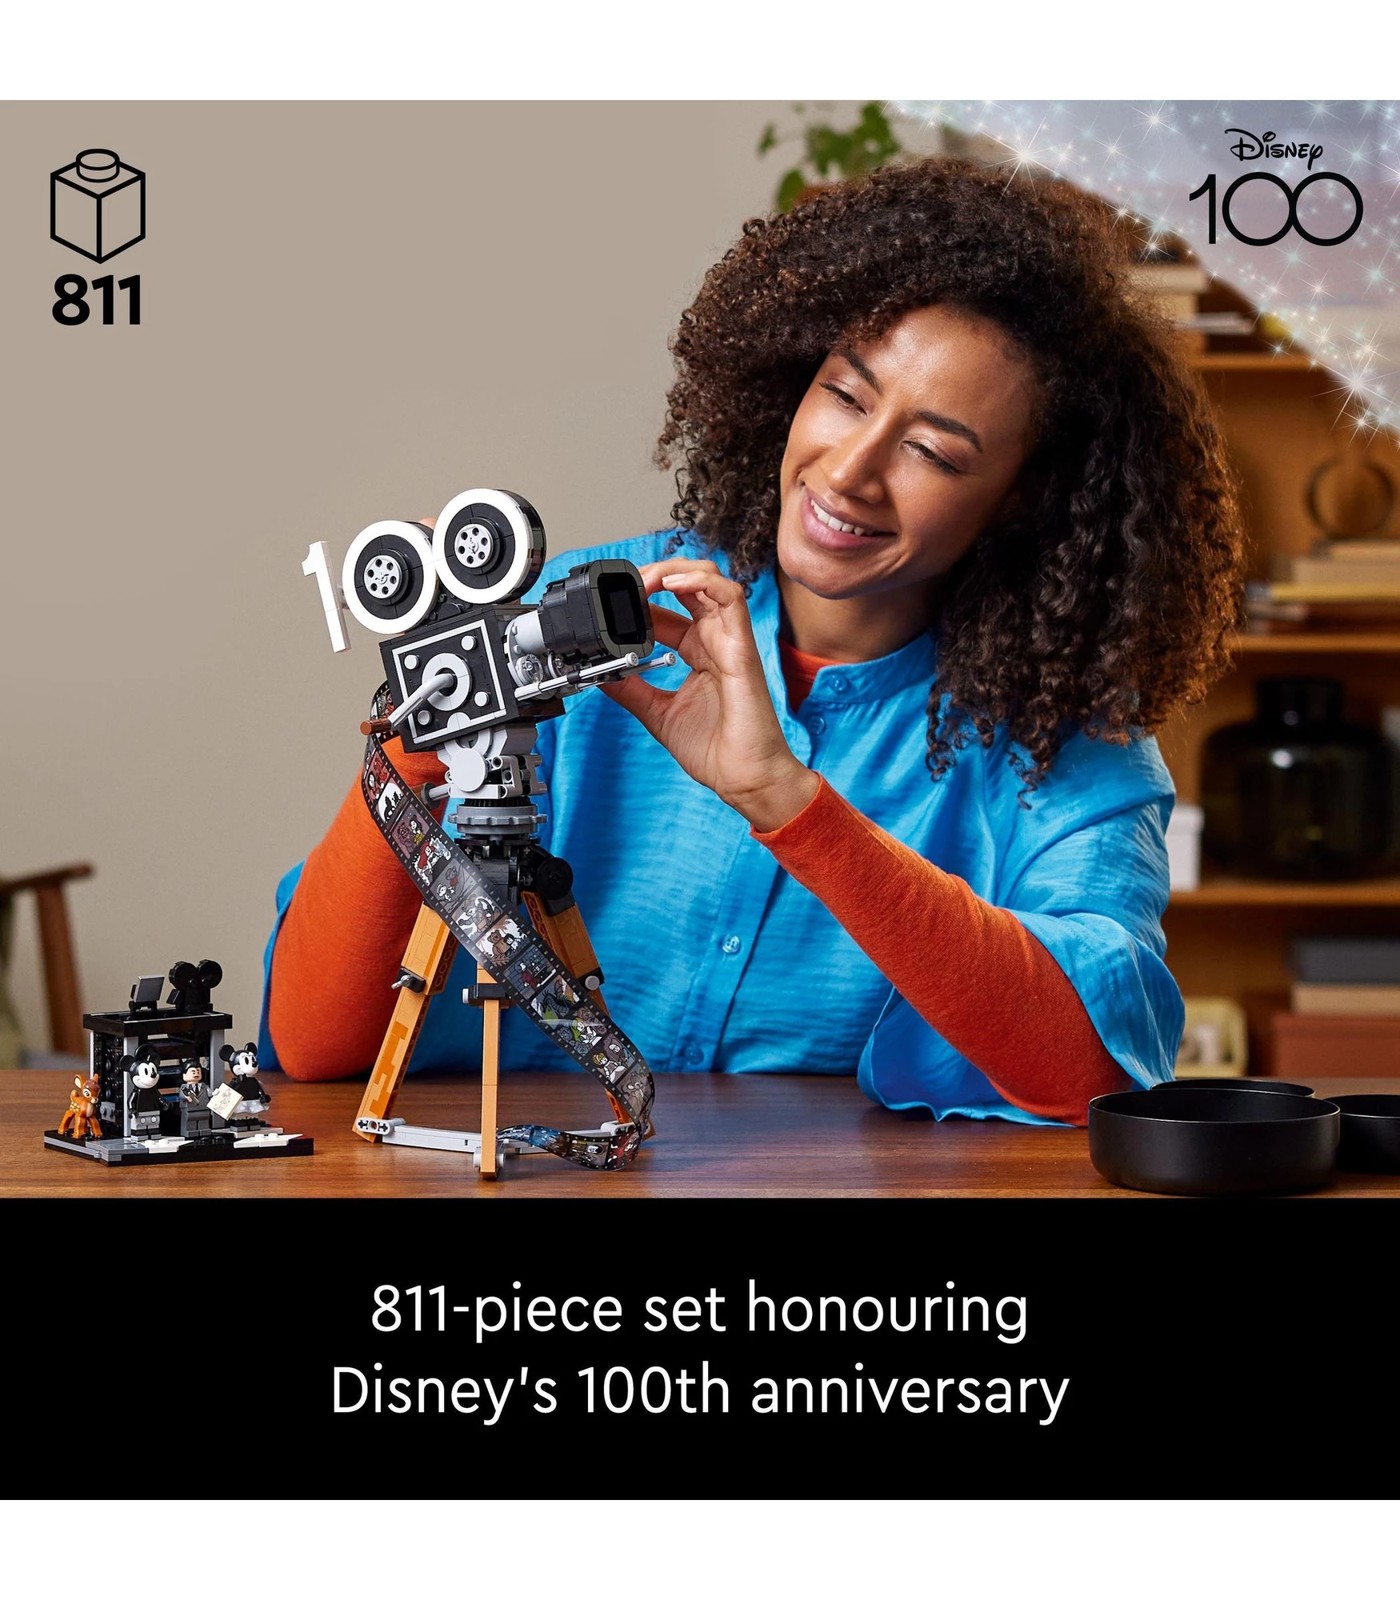 LEGO® Disney 100 Classic Walt Disney Tribute Camera 43230